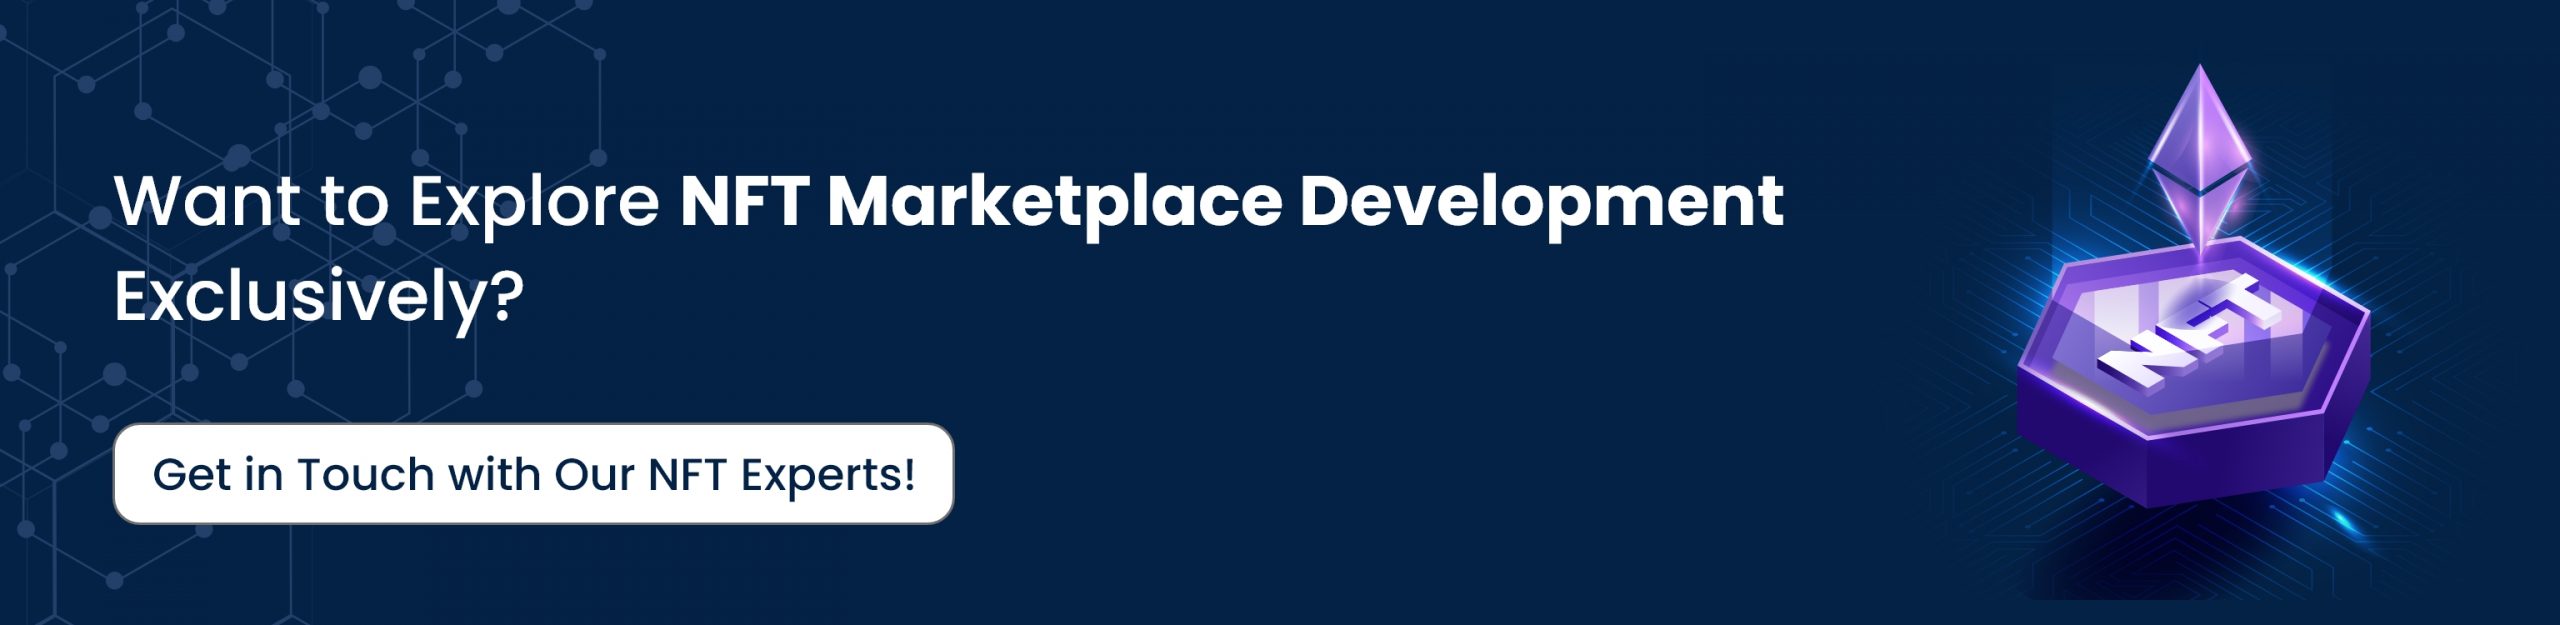 Explore NFT marketplace development